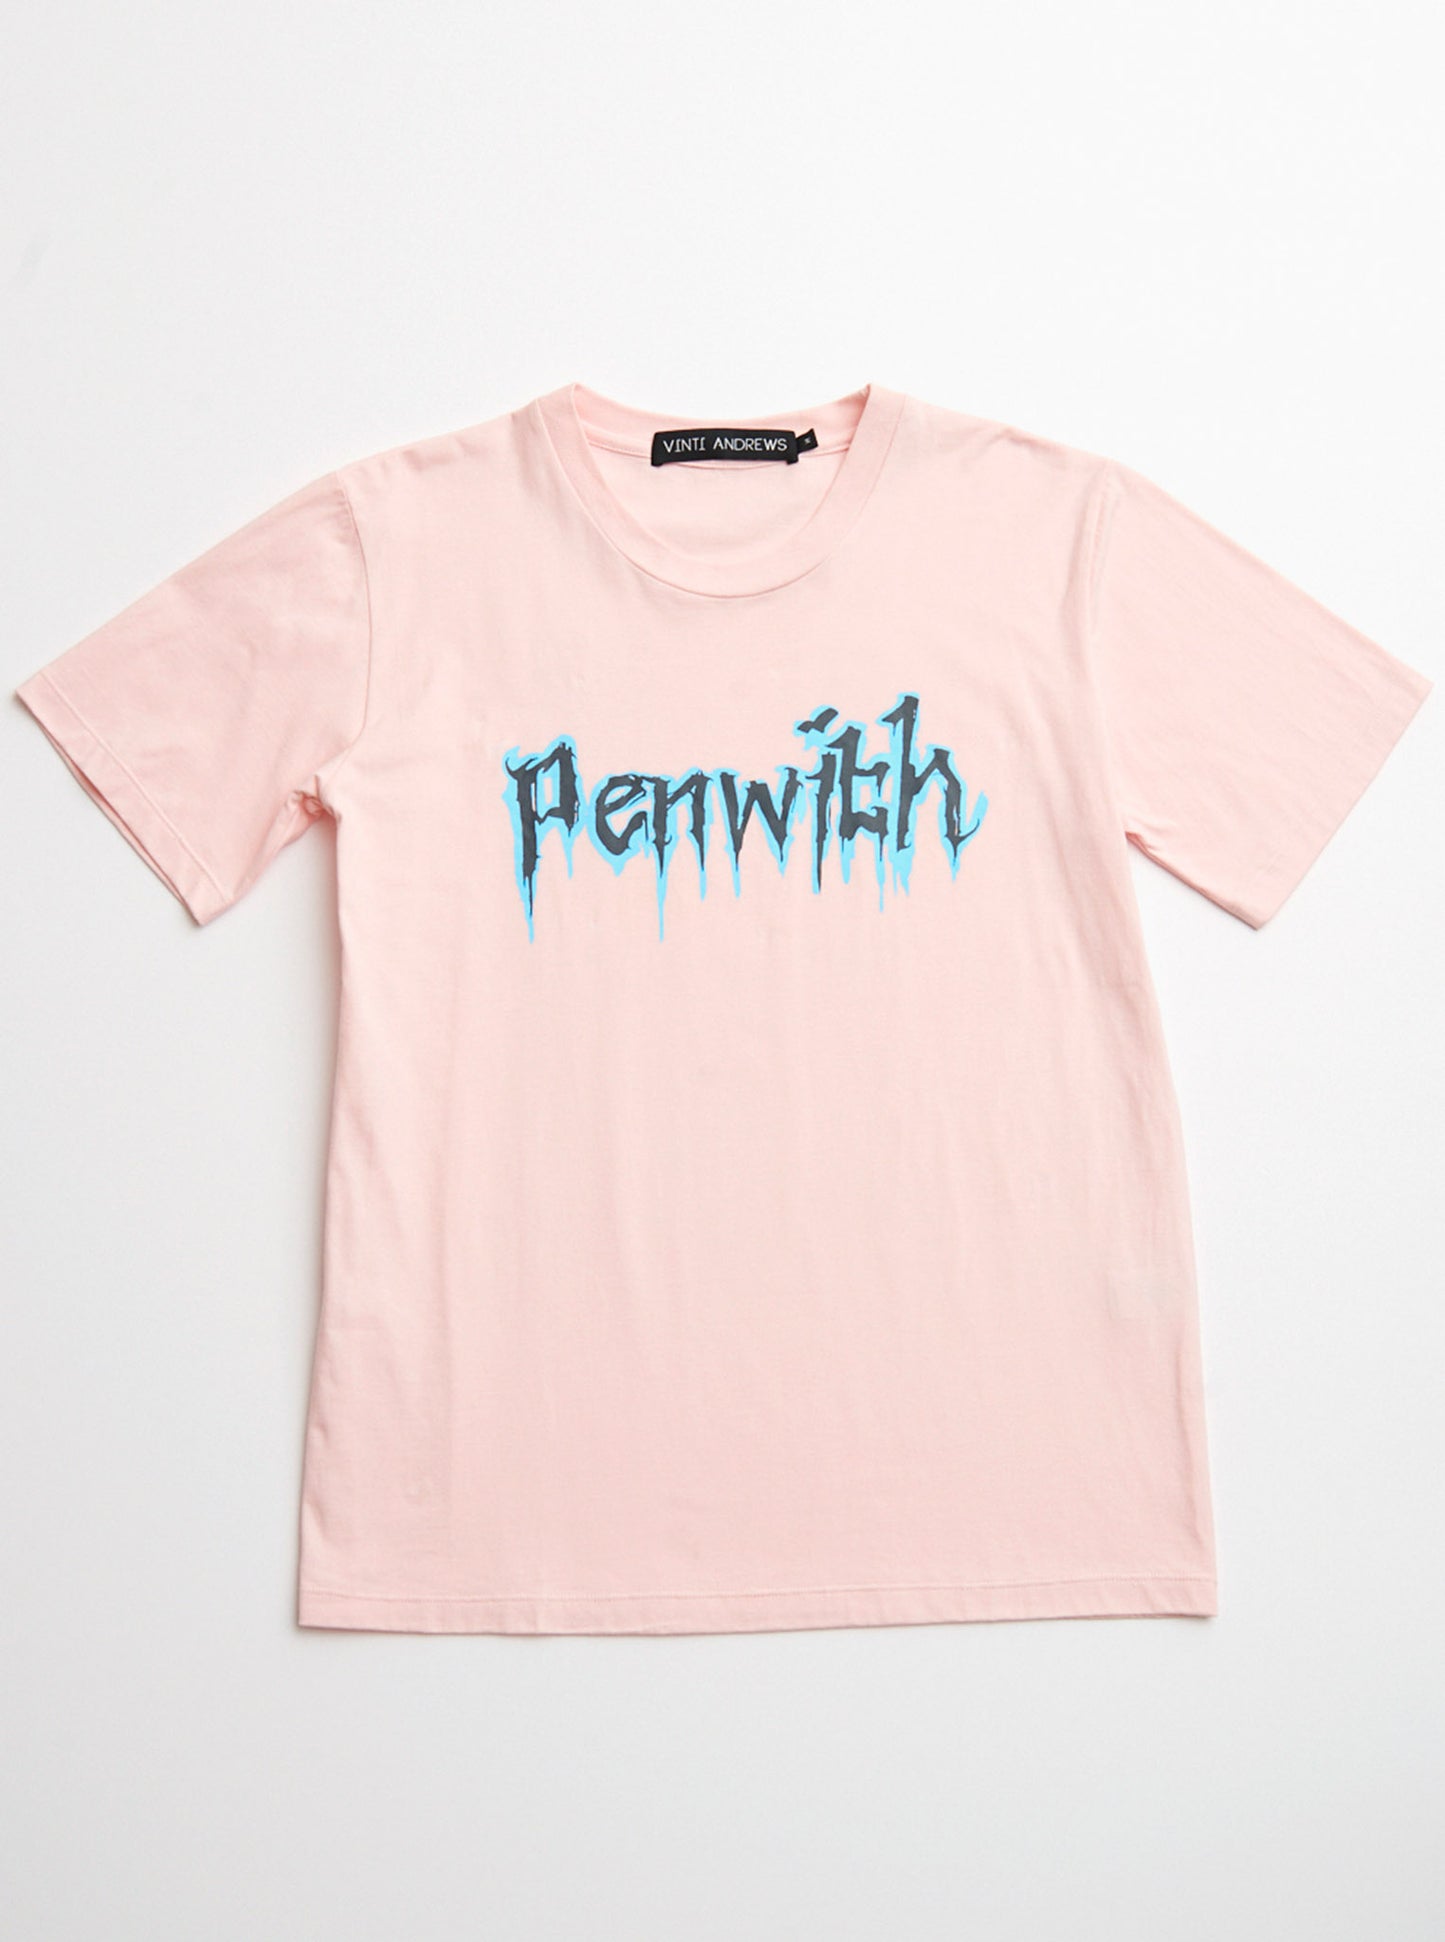 Vinti Andrews Penwith Printed T-Shirt Pink